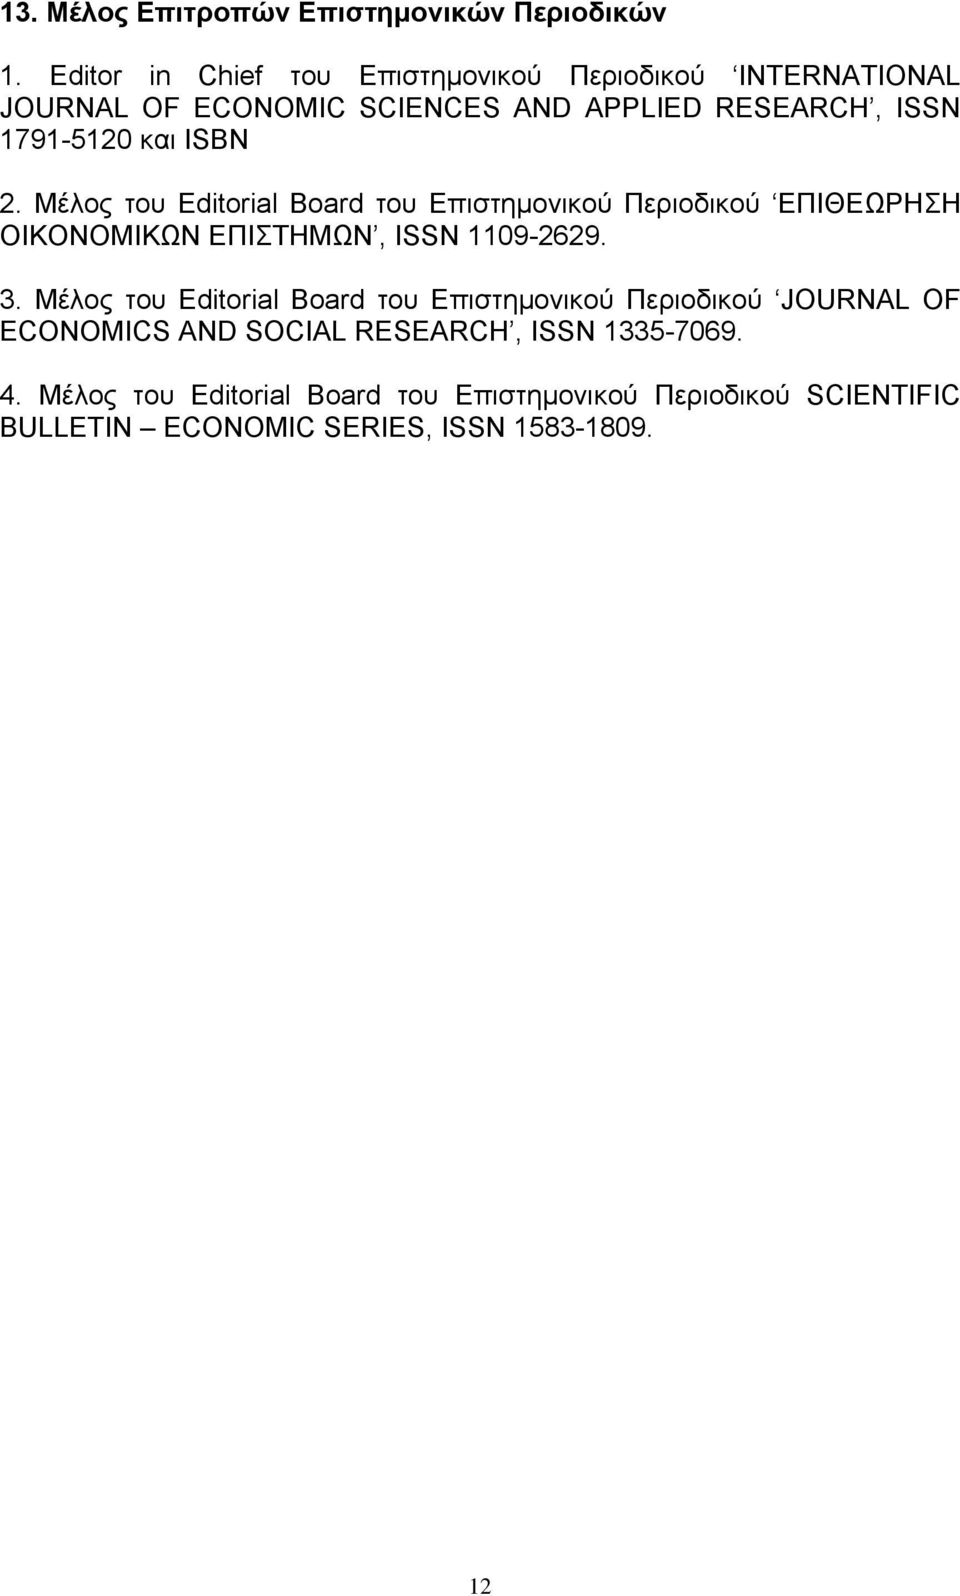 ISBN 2. Μέλος του Editorial Board του Επιστημονικού Περιοδικού ΕΠΙΘΕΩΡΗΣΗ ΟΙΚΟΝΟΜΙΚΩΝ ΕΠΙΣΤΗΜΩΝ, ISSN 1109-2629. 3.